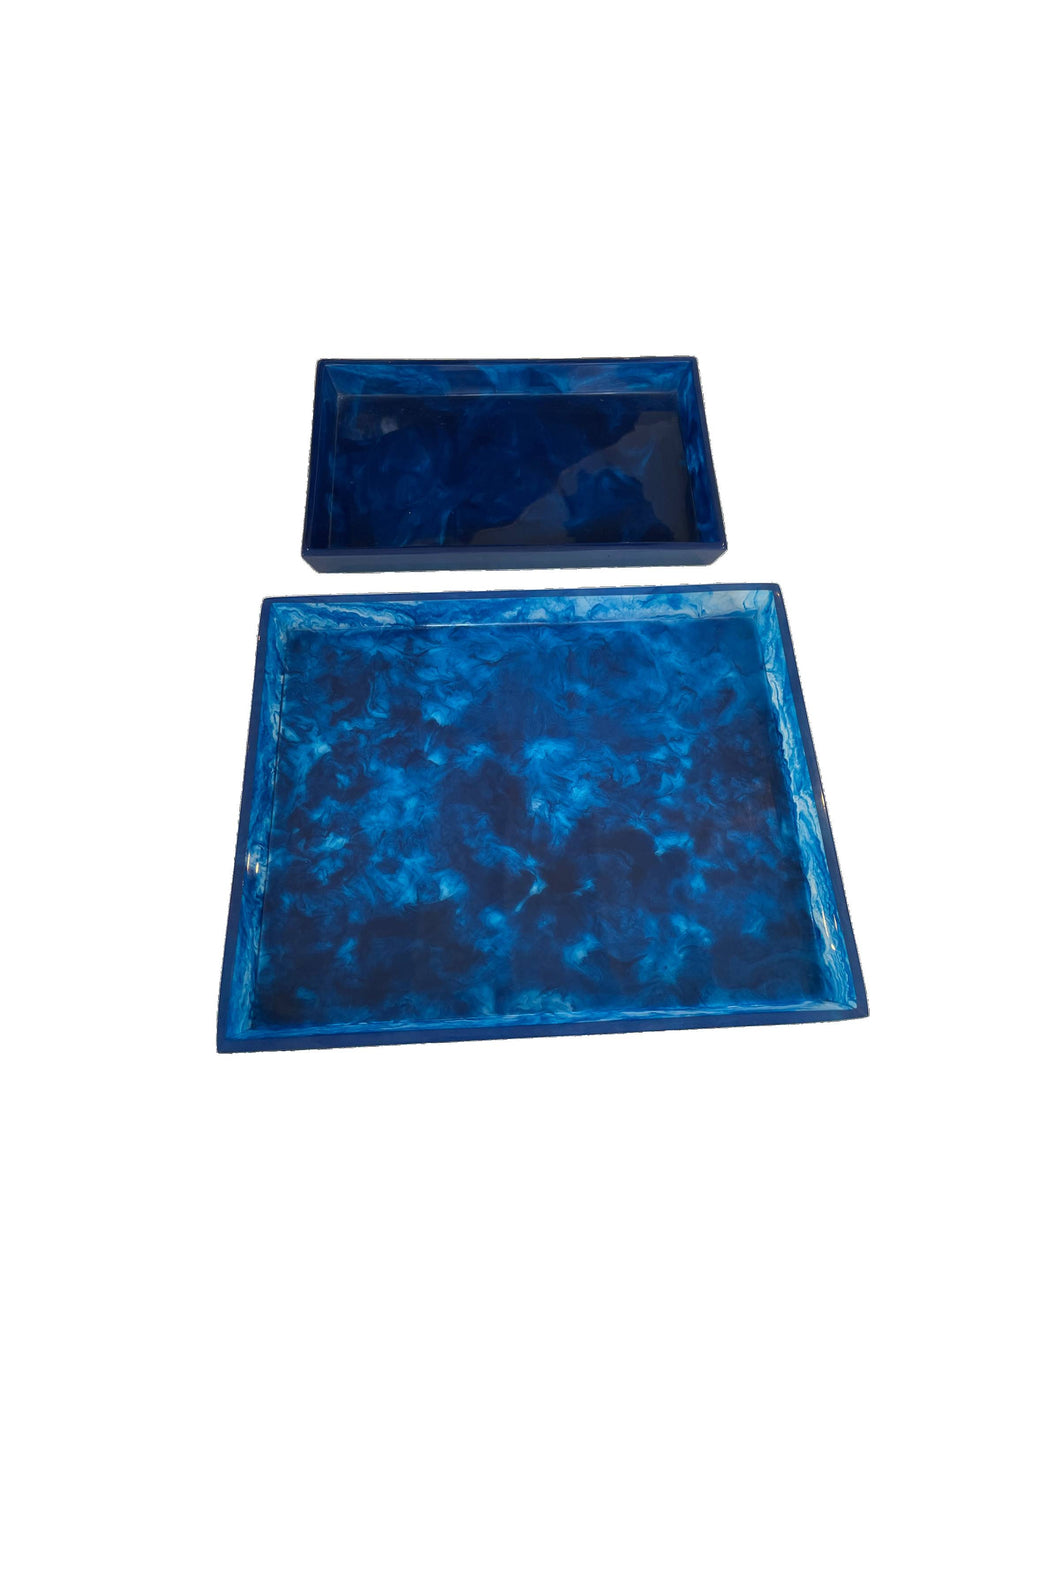 Cobalt Blue Resin Tray Set (2)